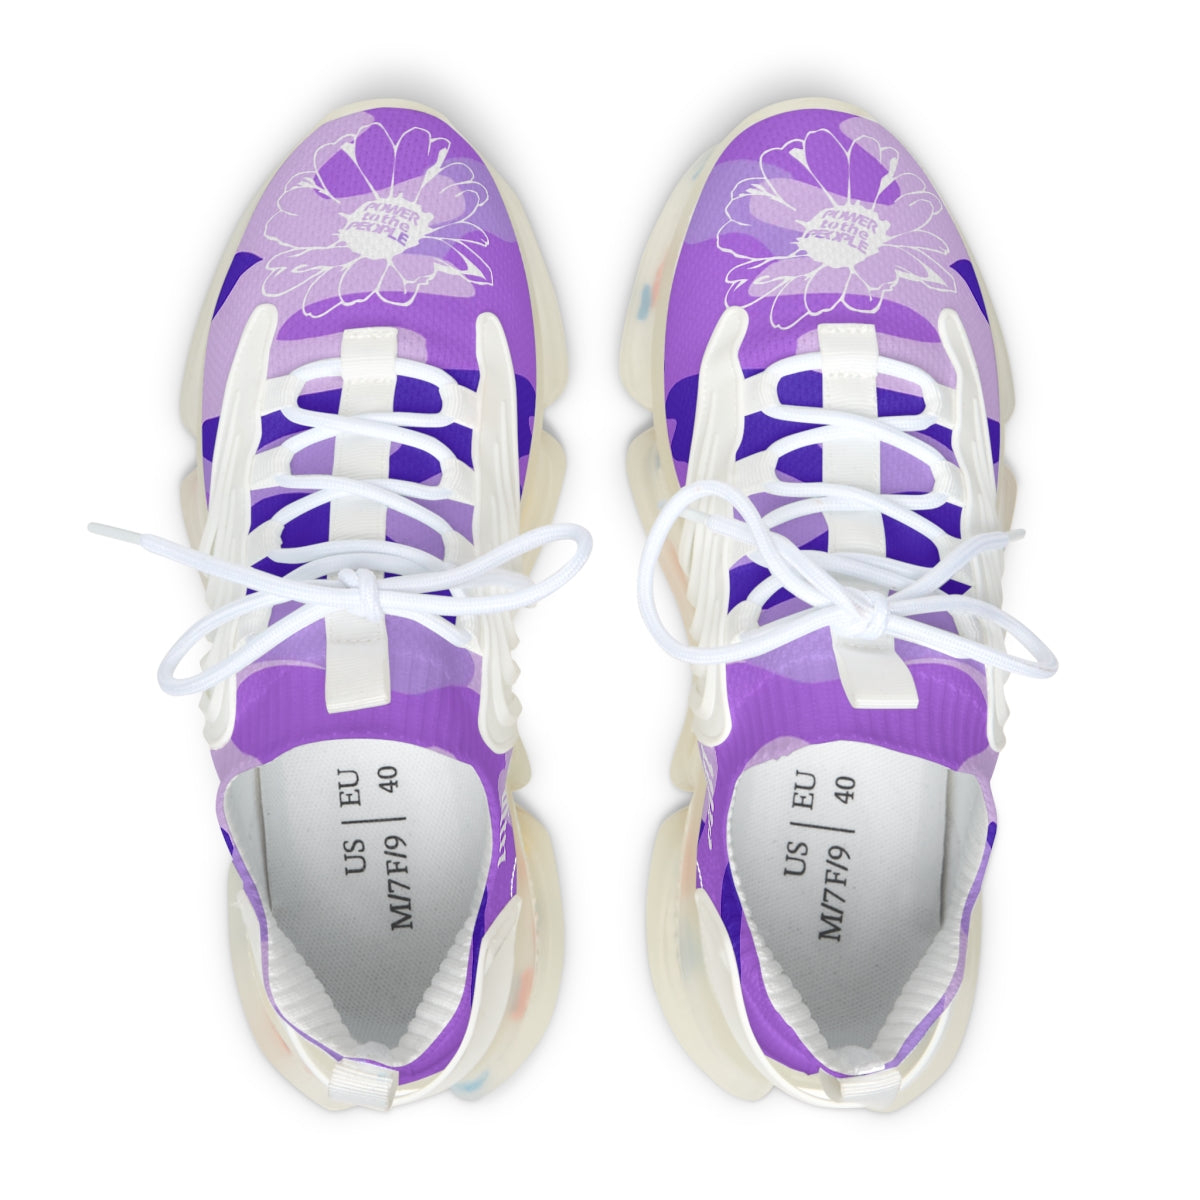 UNO POWERFLOWER Women's Mesh Sneakers Camo Collection